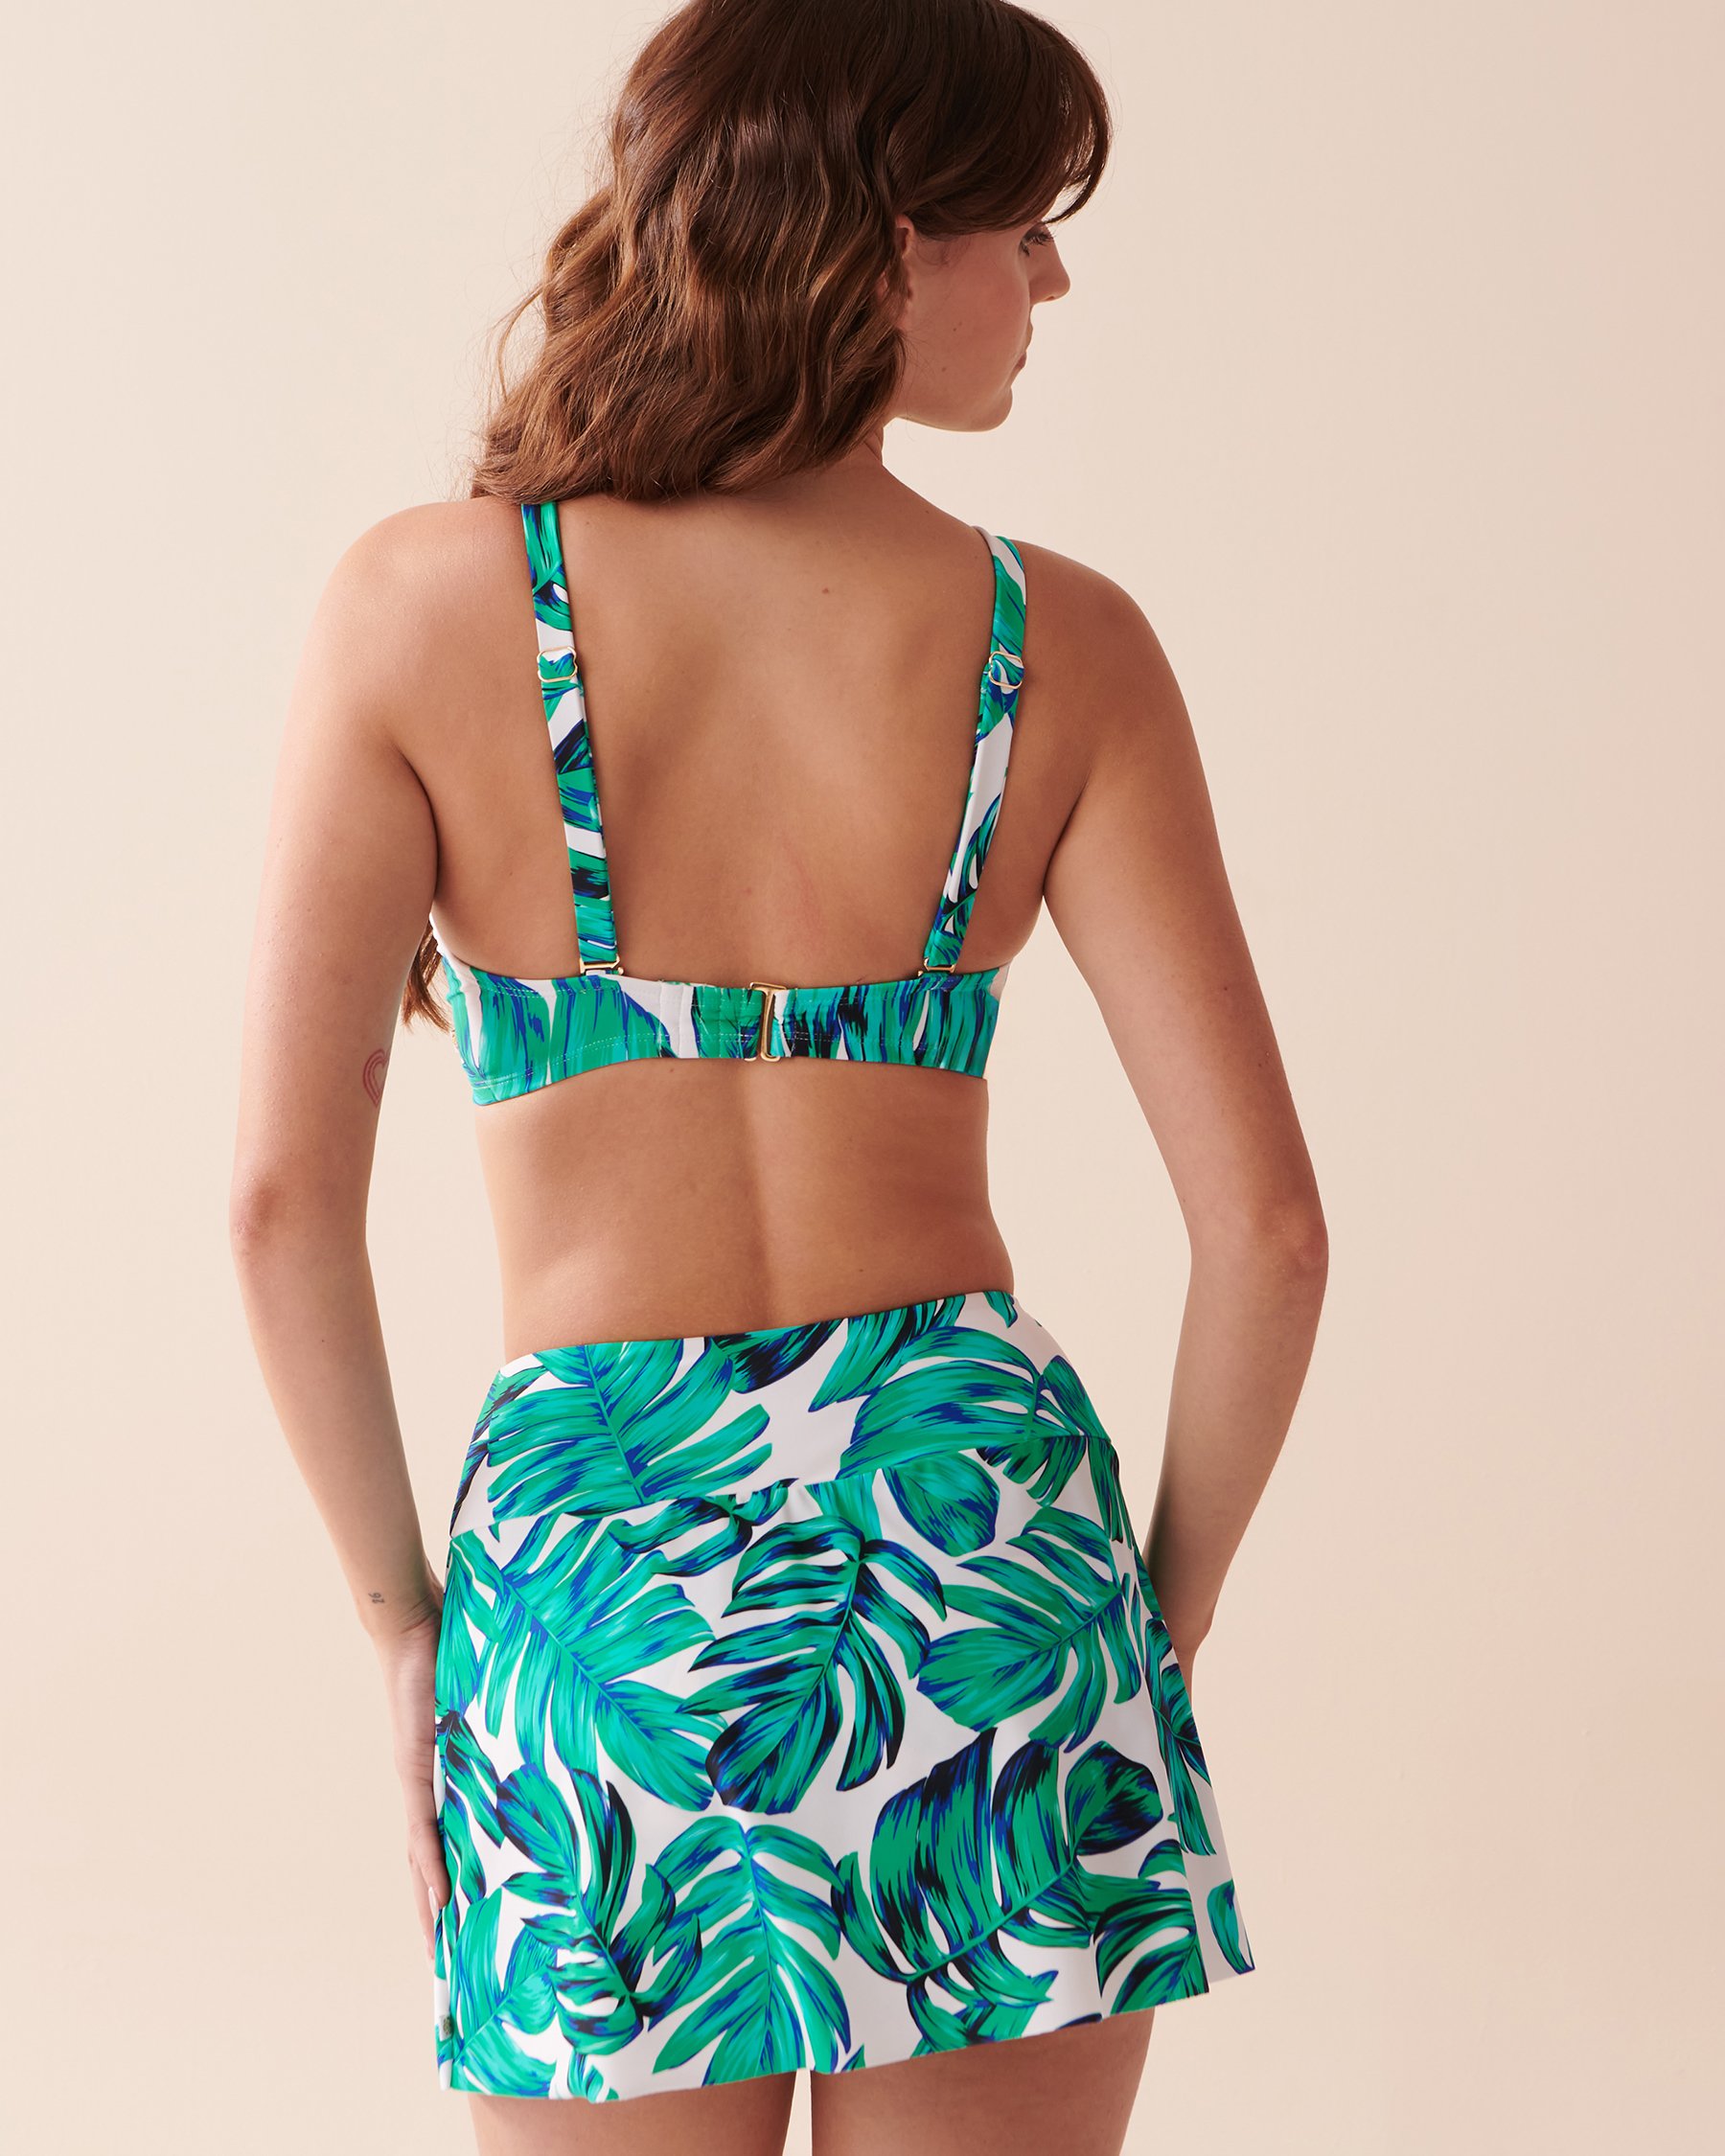 LA VIE EN ROSE AQUA PALM LEAVES Recycled Fibers D Cup Bralette Bikini Top Palm Leaves 70200121 - View6